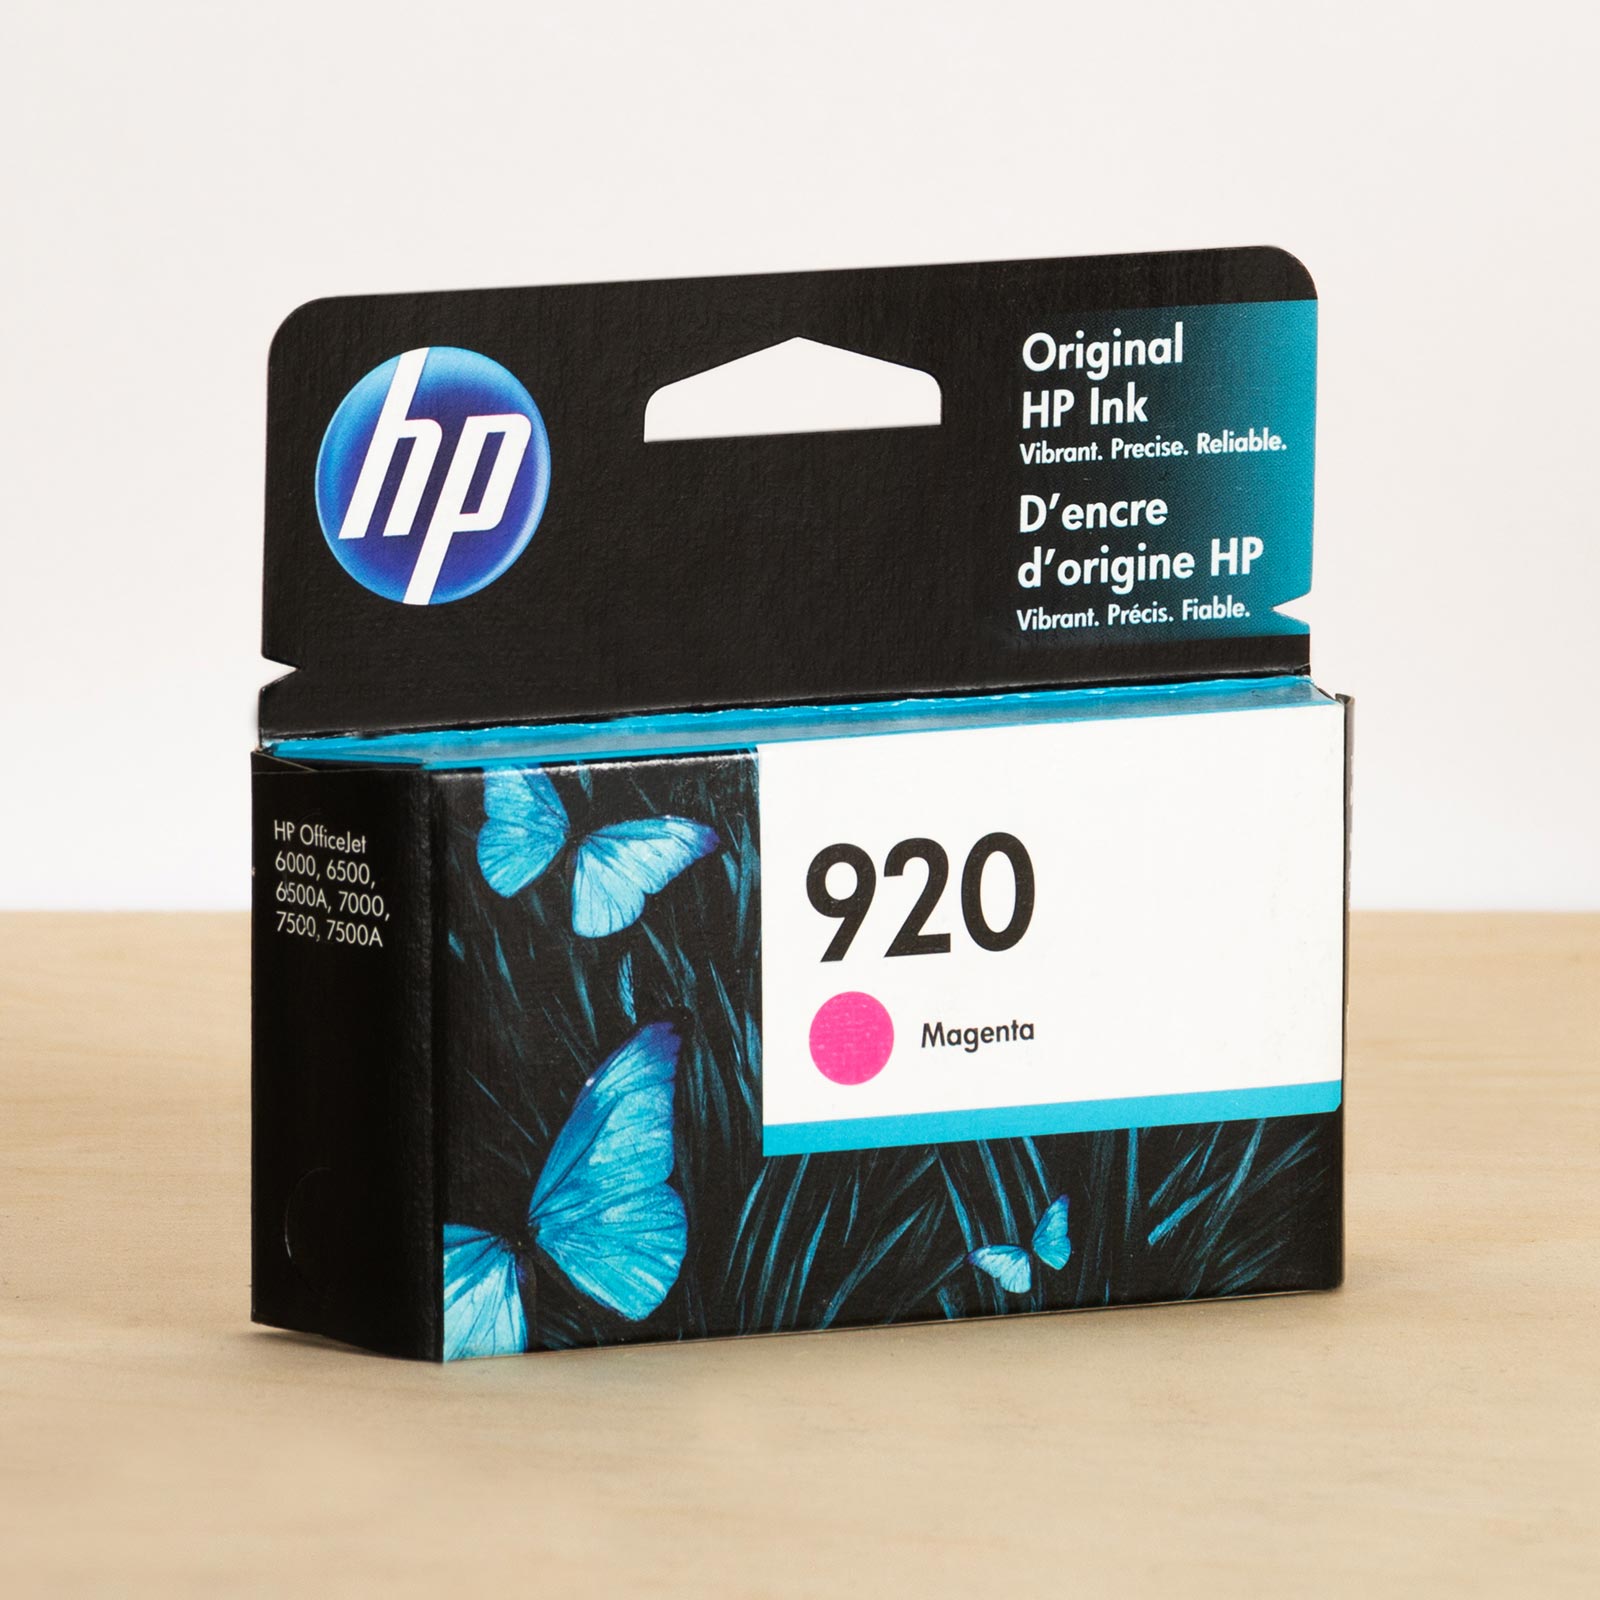 Hp ink-magenta-HP-OfficeJet-6000